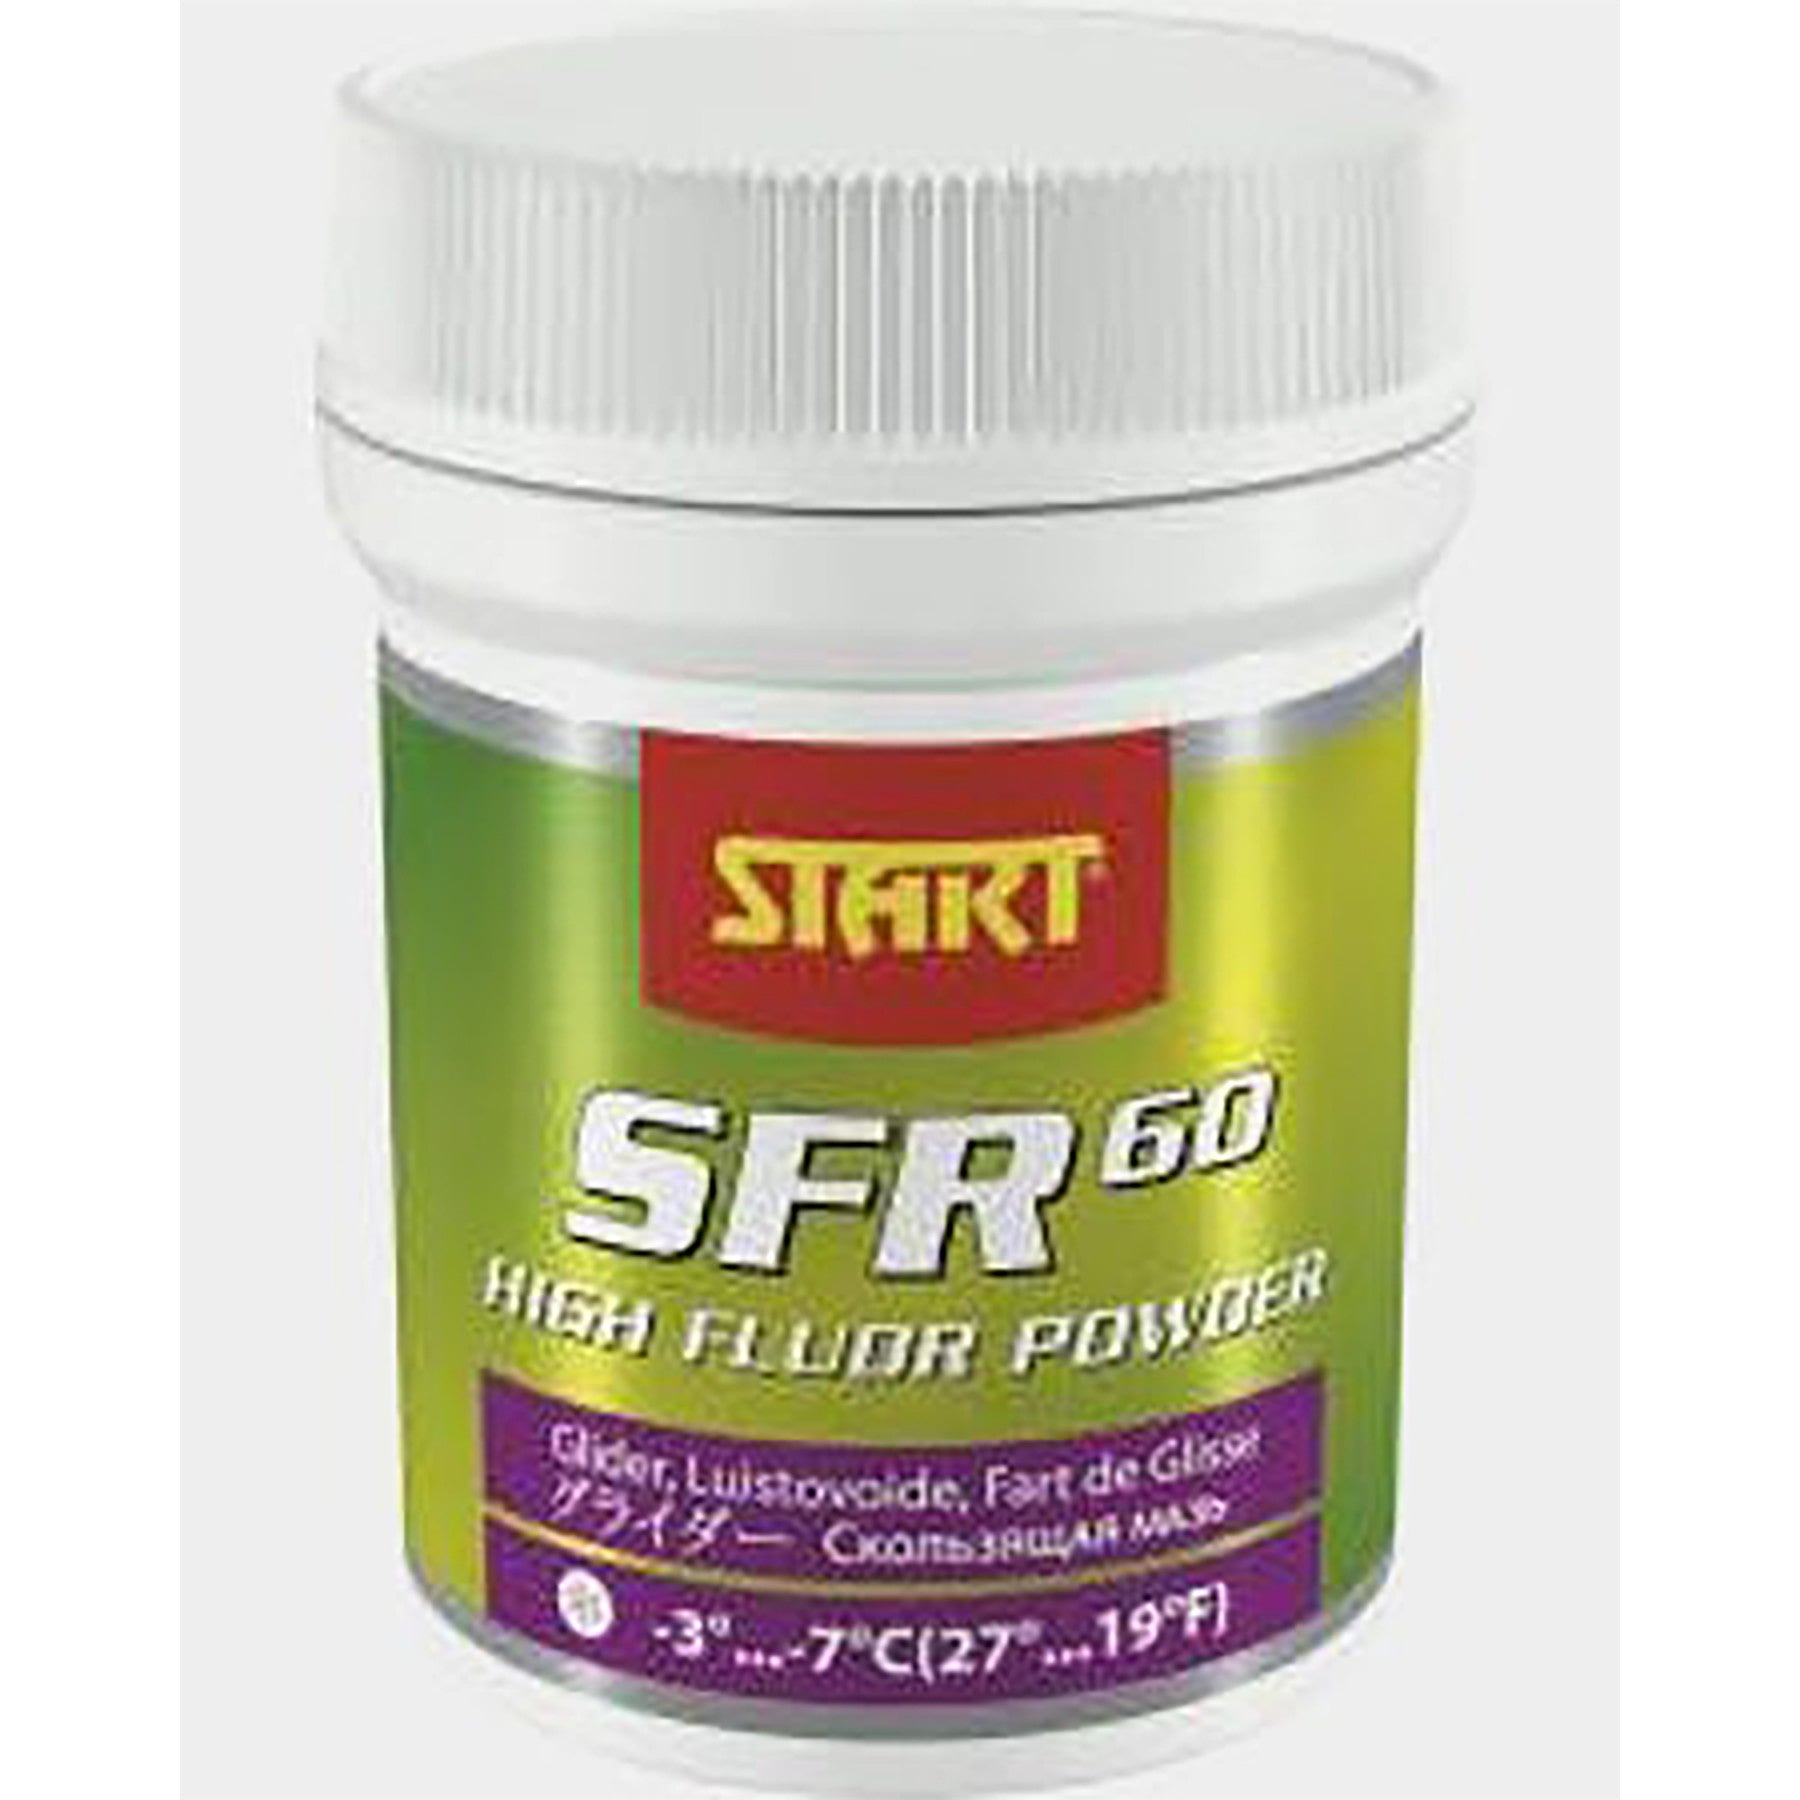 Start SFR60 Powder